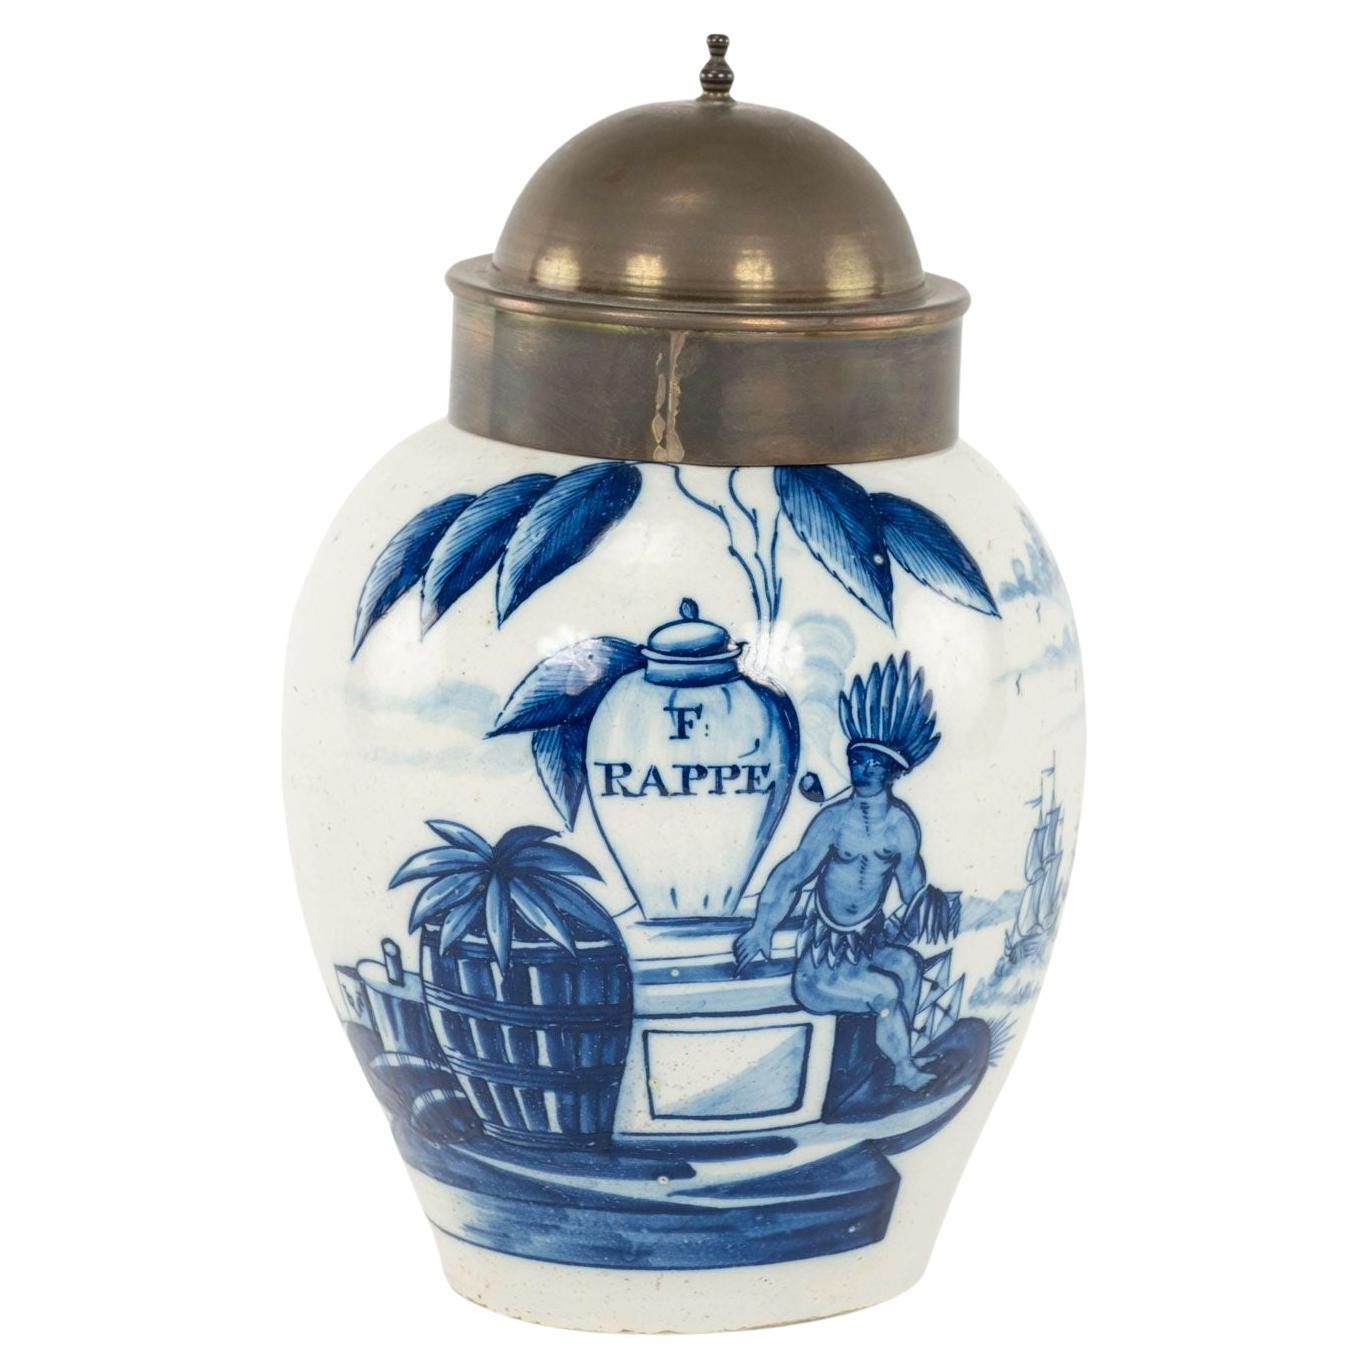 Delft Blue and White "Rappe" Tobacco Jar For Sale